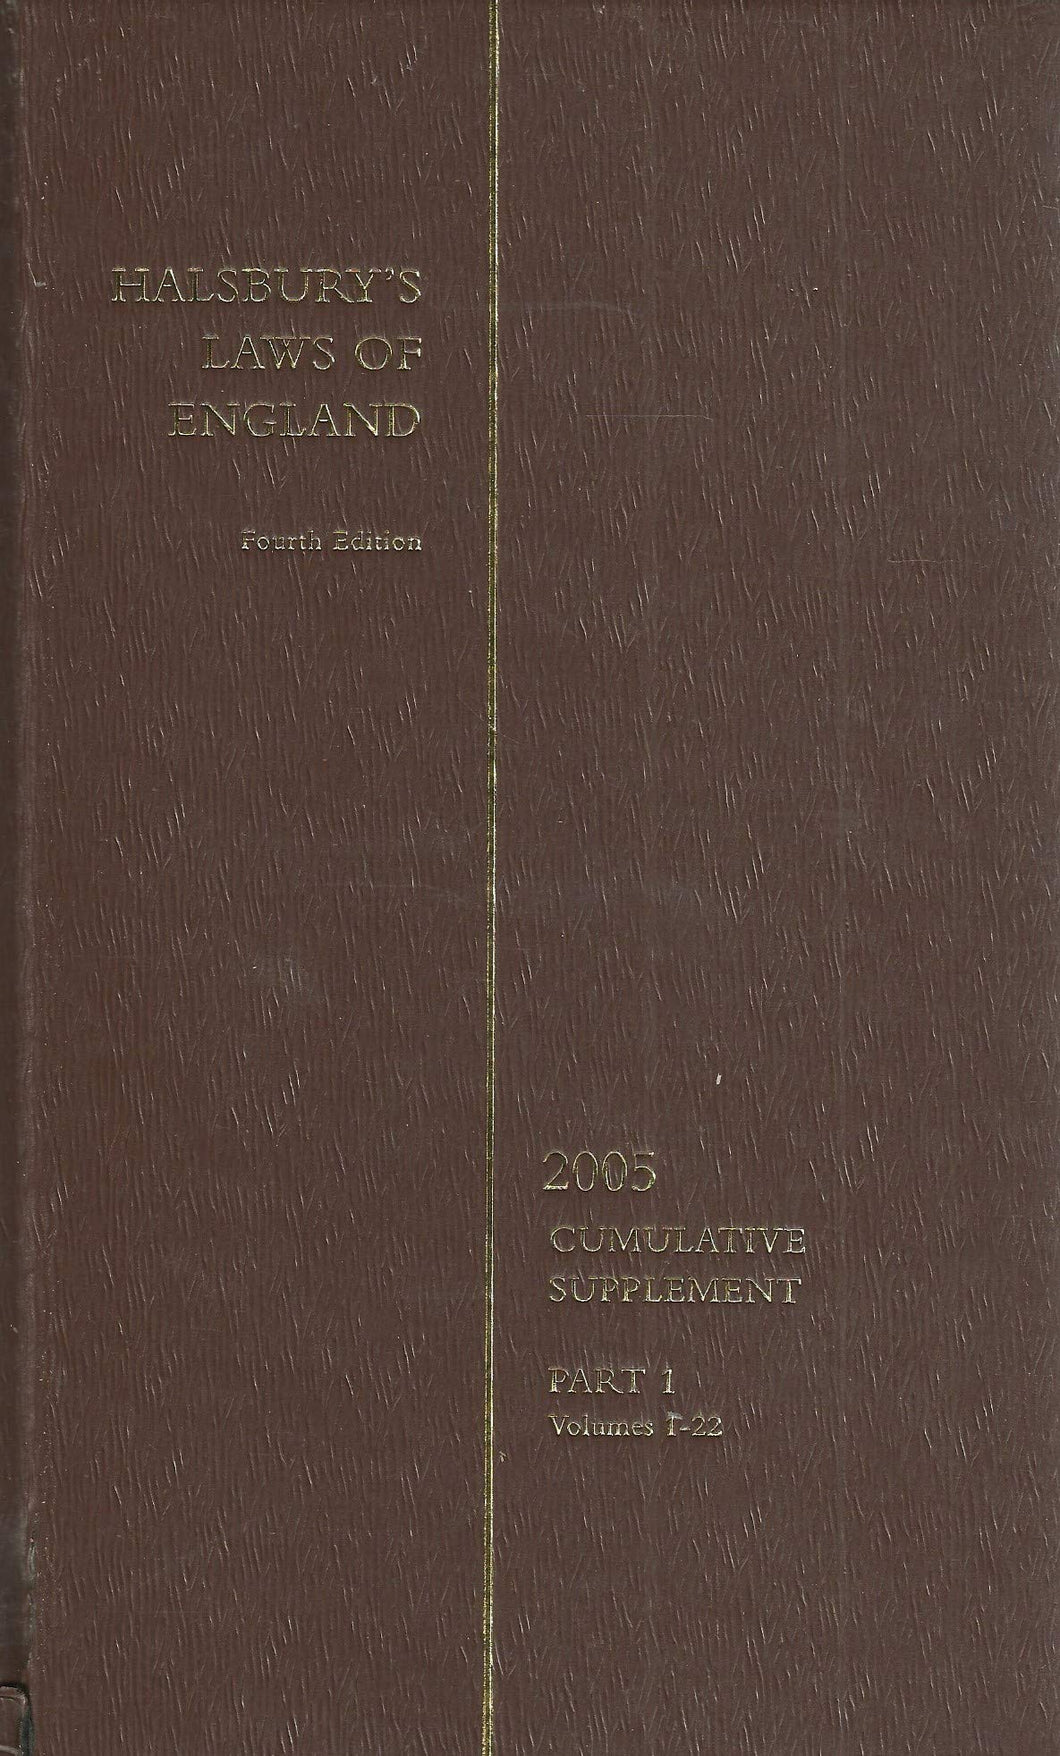 Halsbury's Laws of England - Fourth Edition, 2005 Cumulative Supplement - Part 1, Volume 1-22